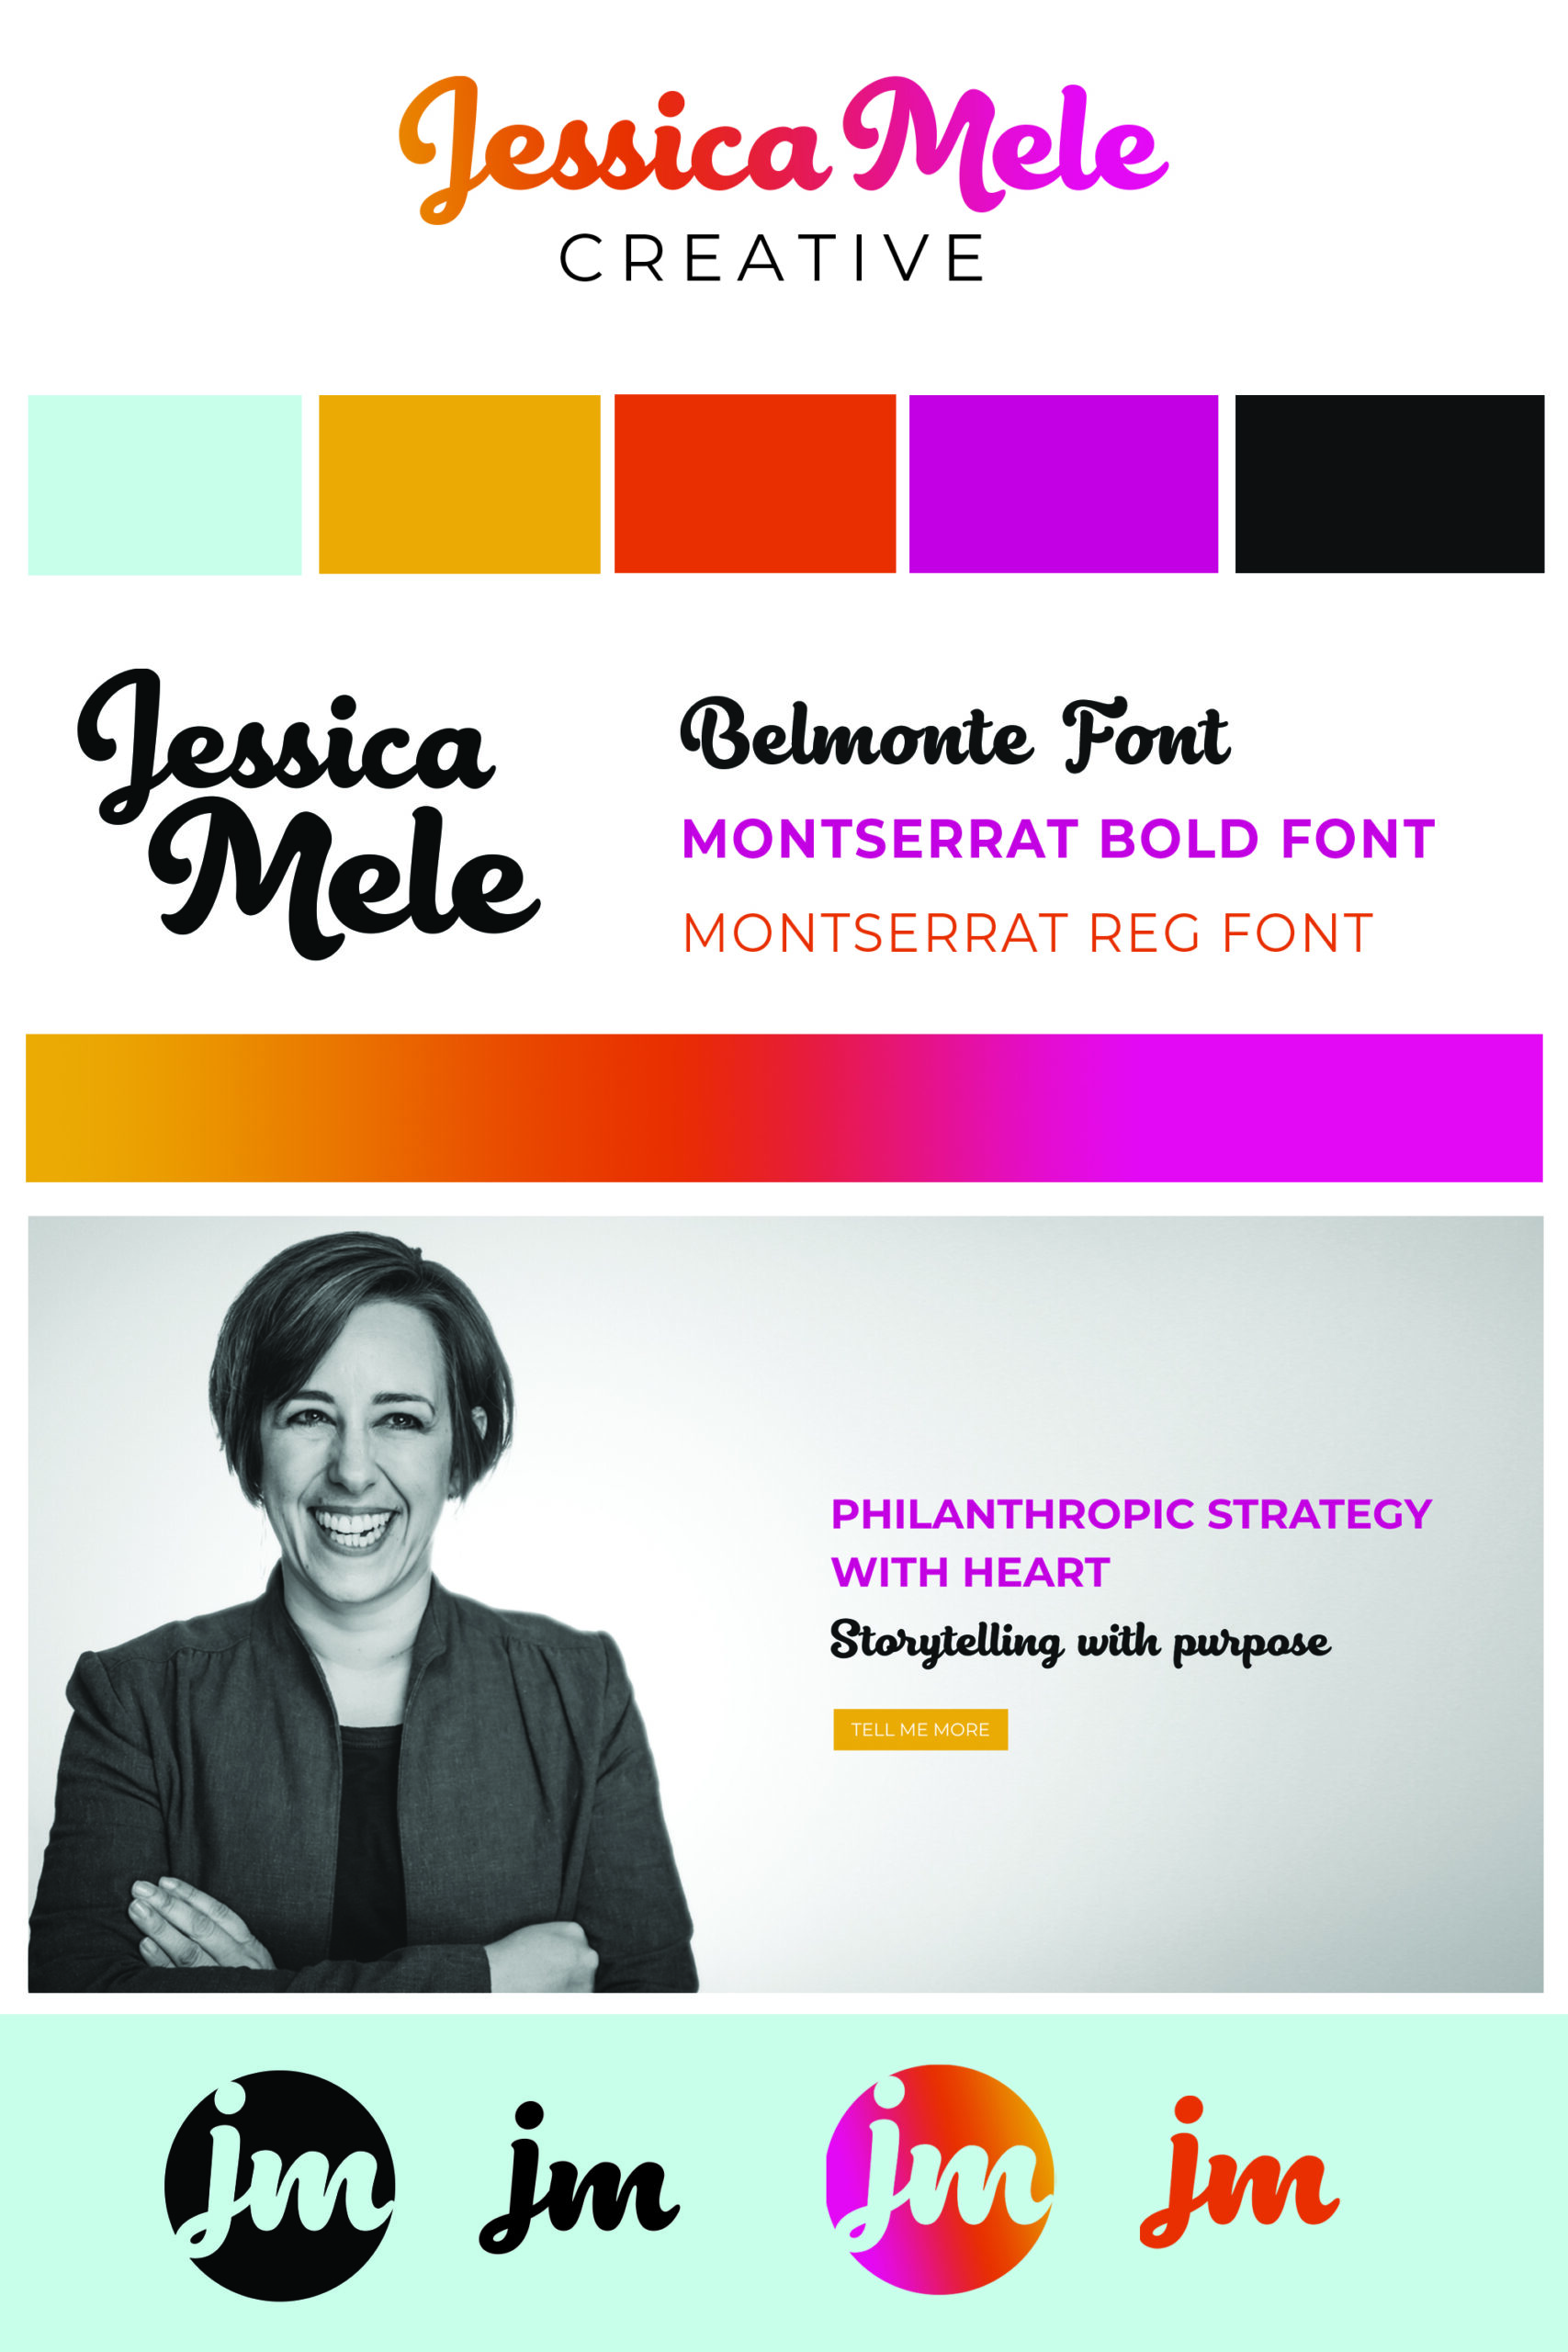 Logo & Branding for Jessica Mele Creative